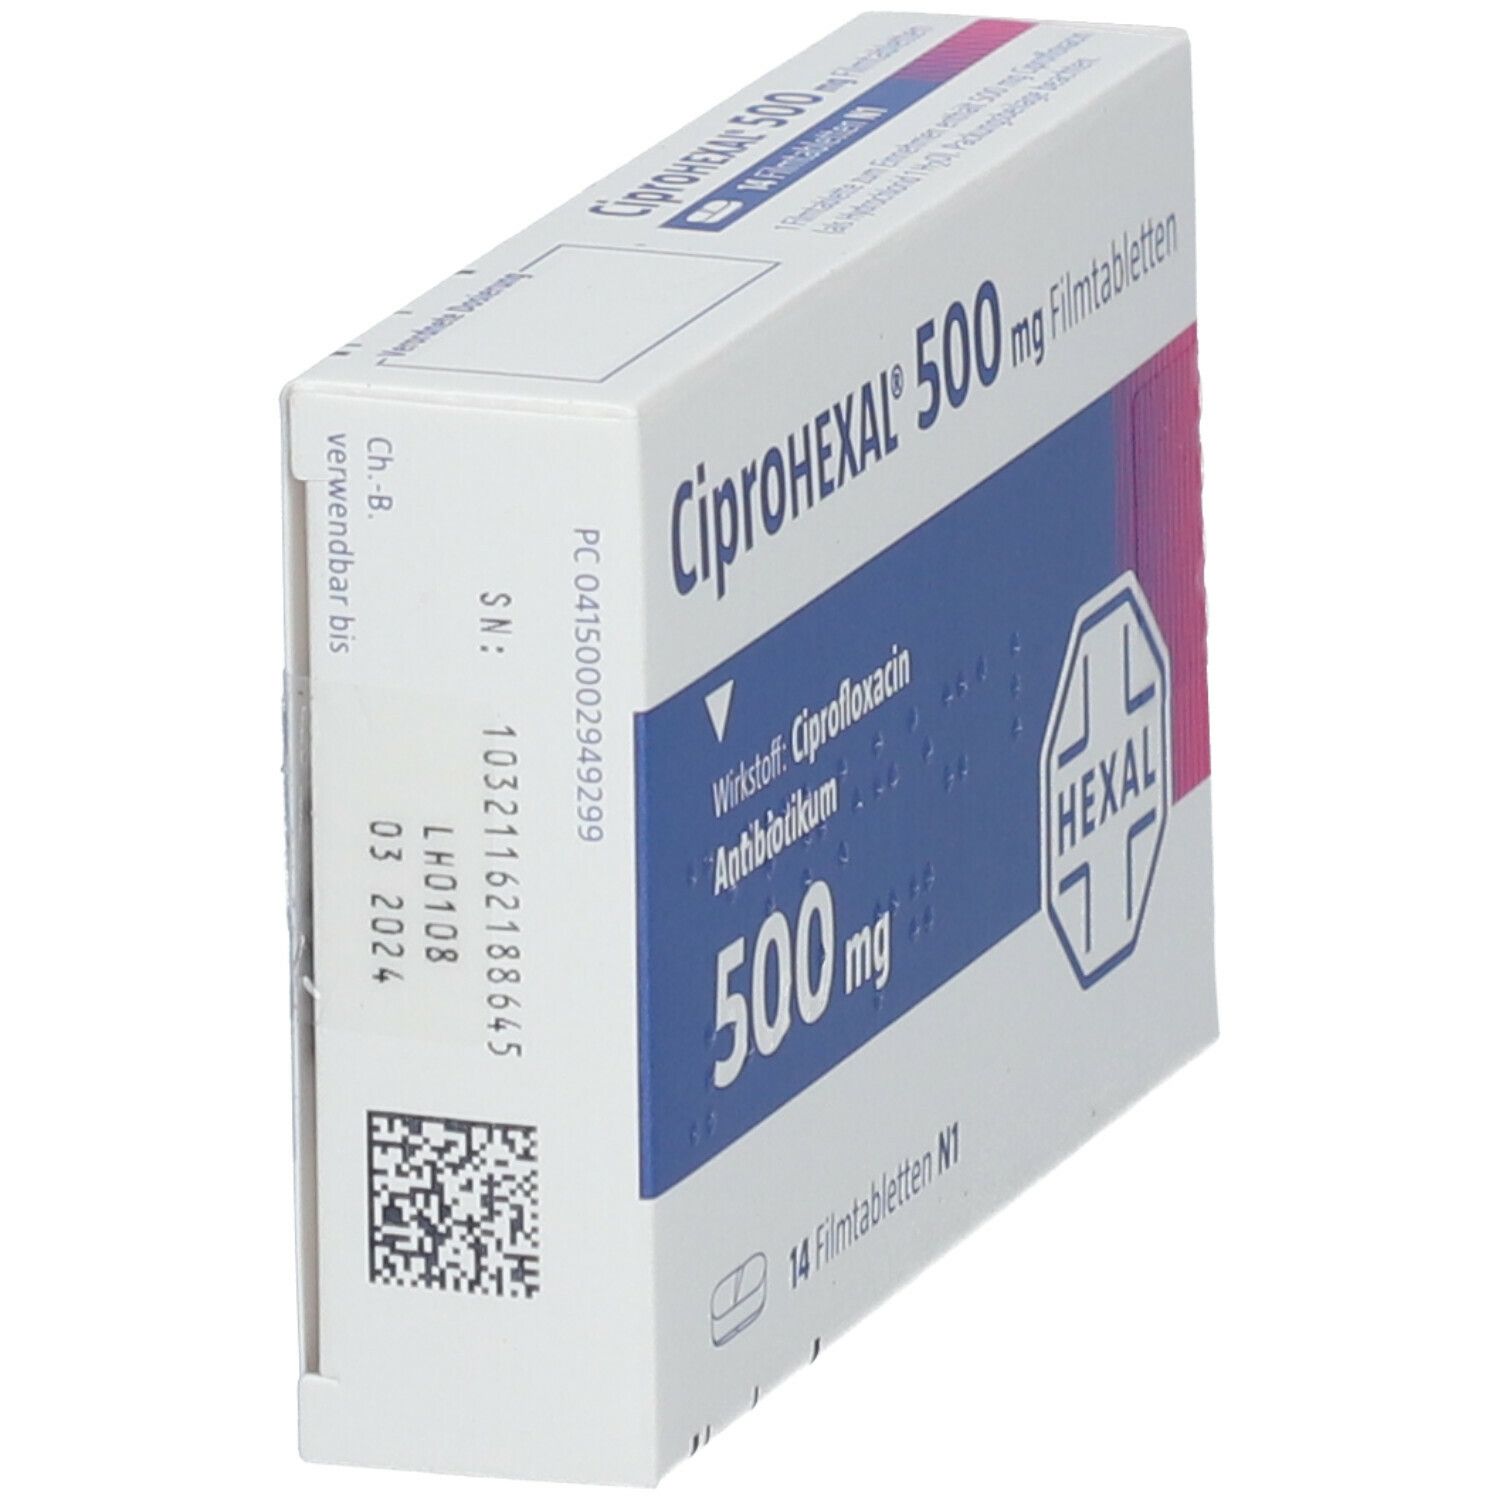 CiproHEXAL® 500 mg